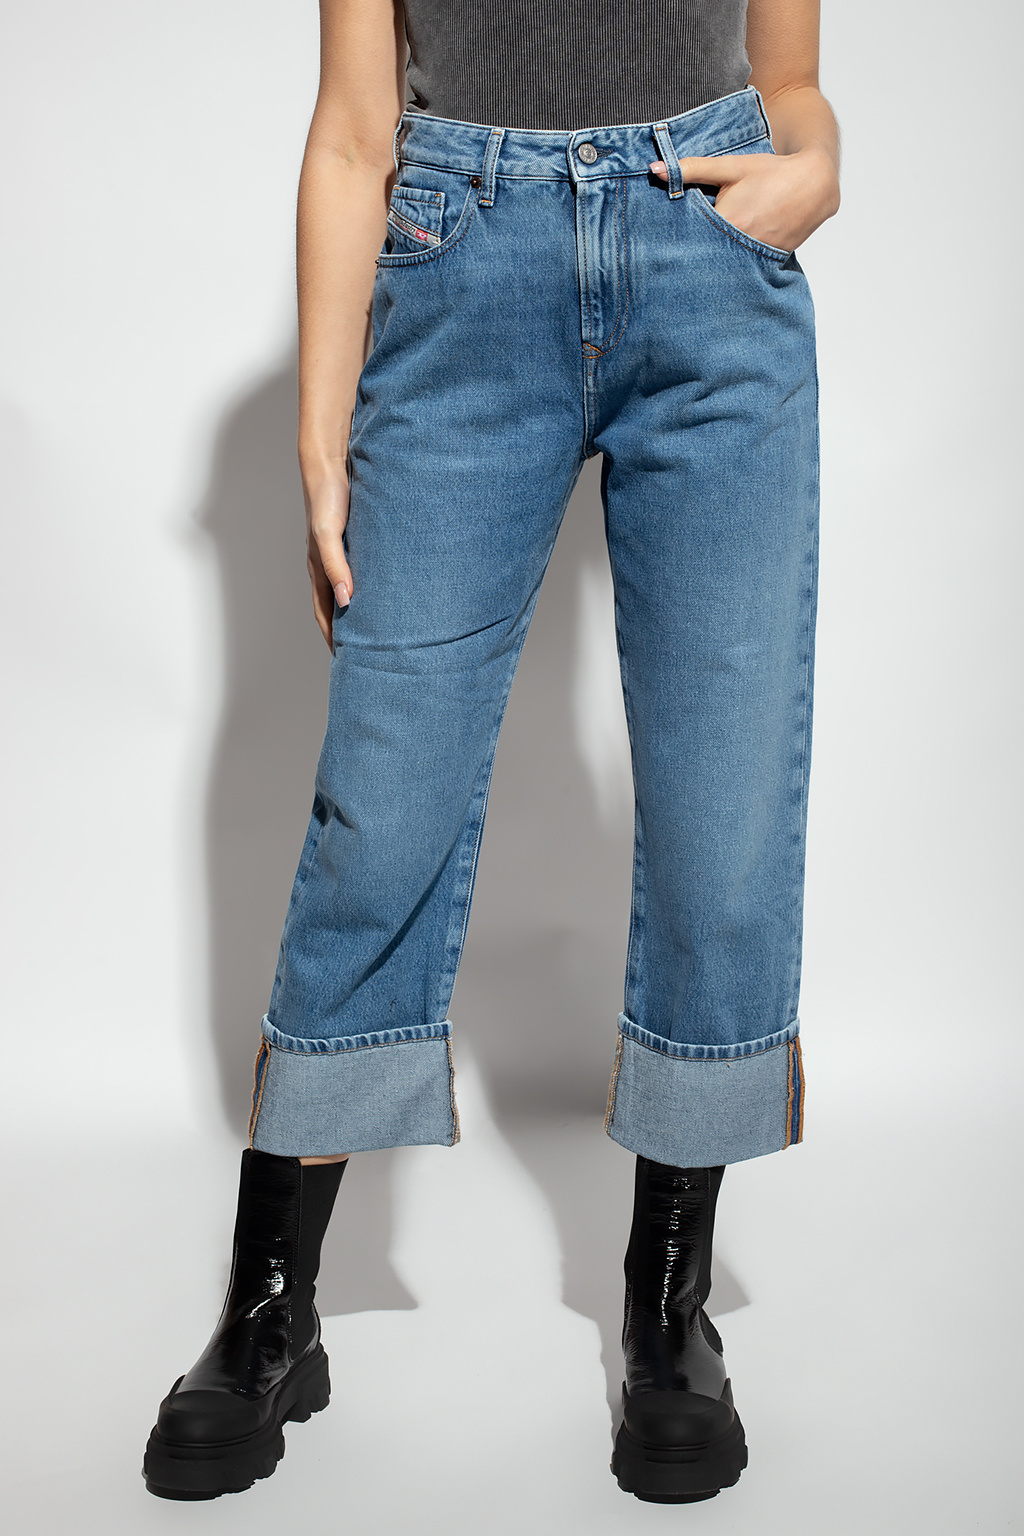 Diesel ‘1999’ loose-fitting jeans | Women's Clothing | Vitkac